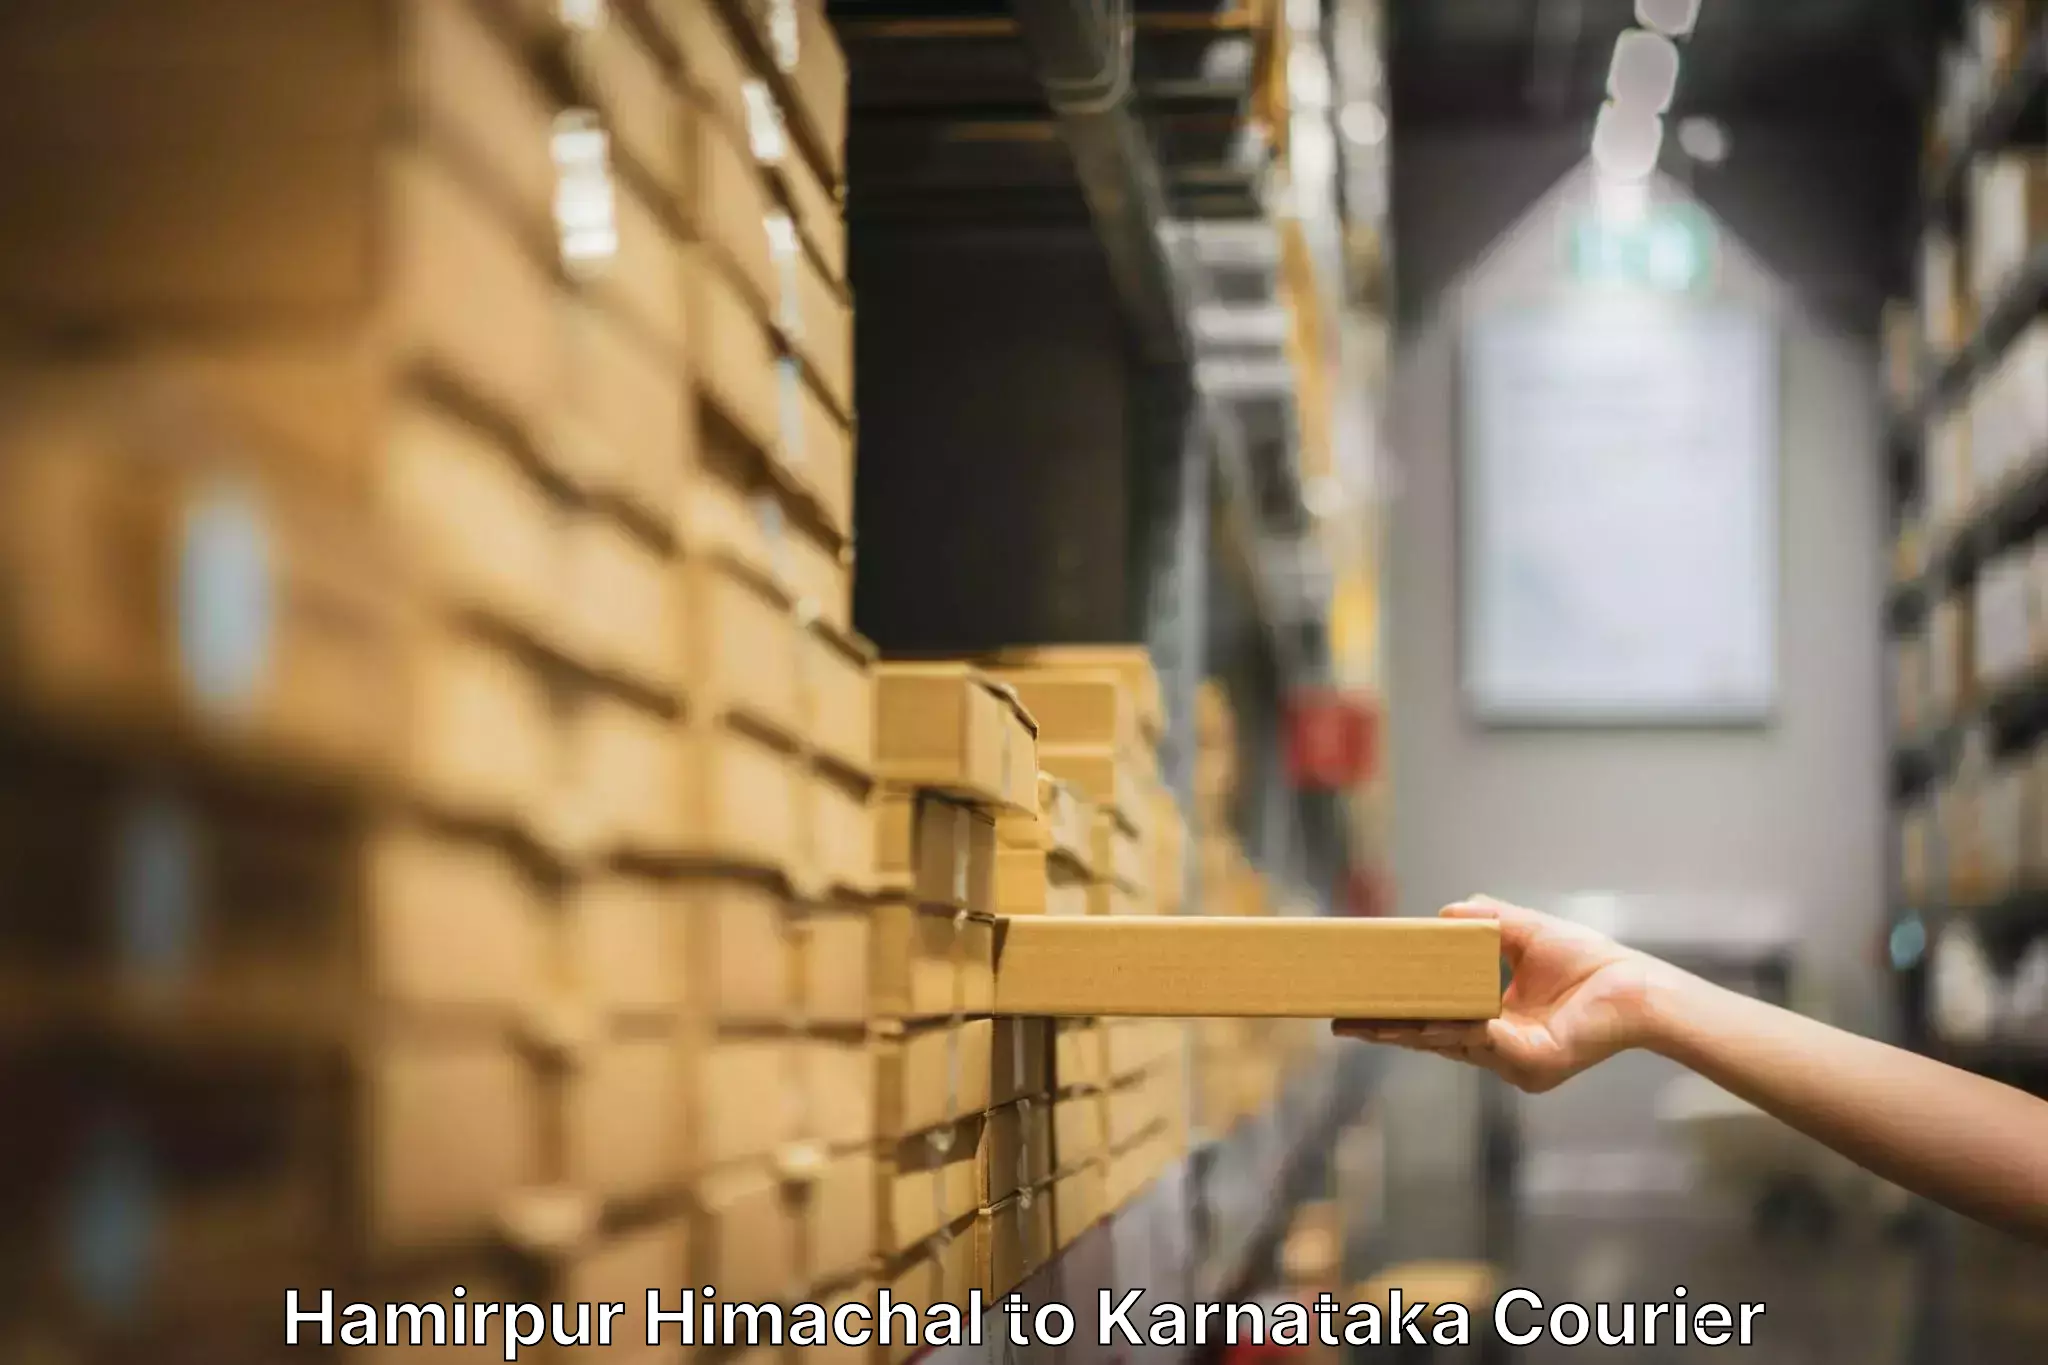 Home shifting experts Hamirpur Himachal to Karnataka